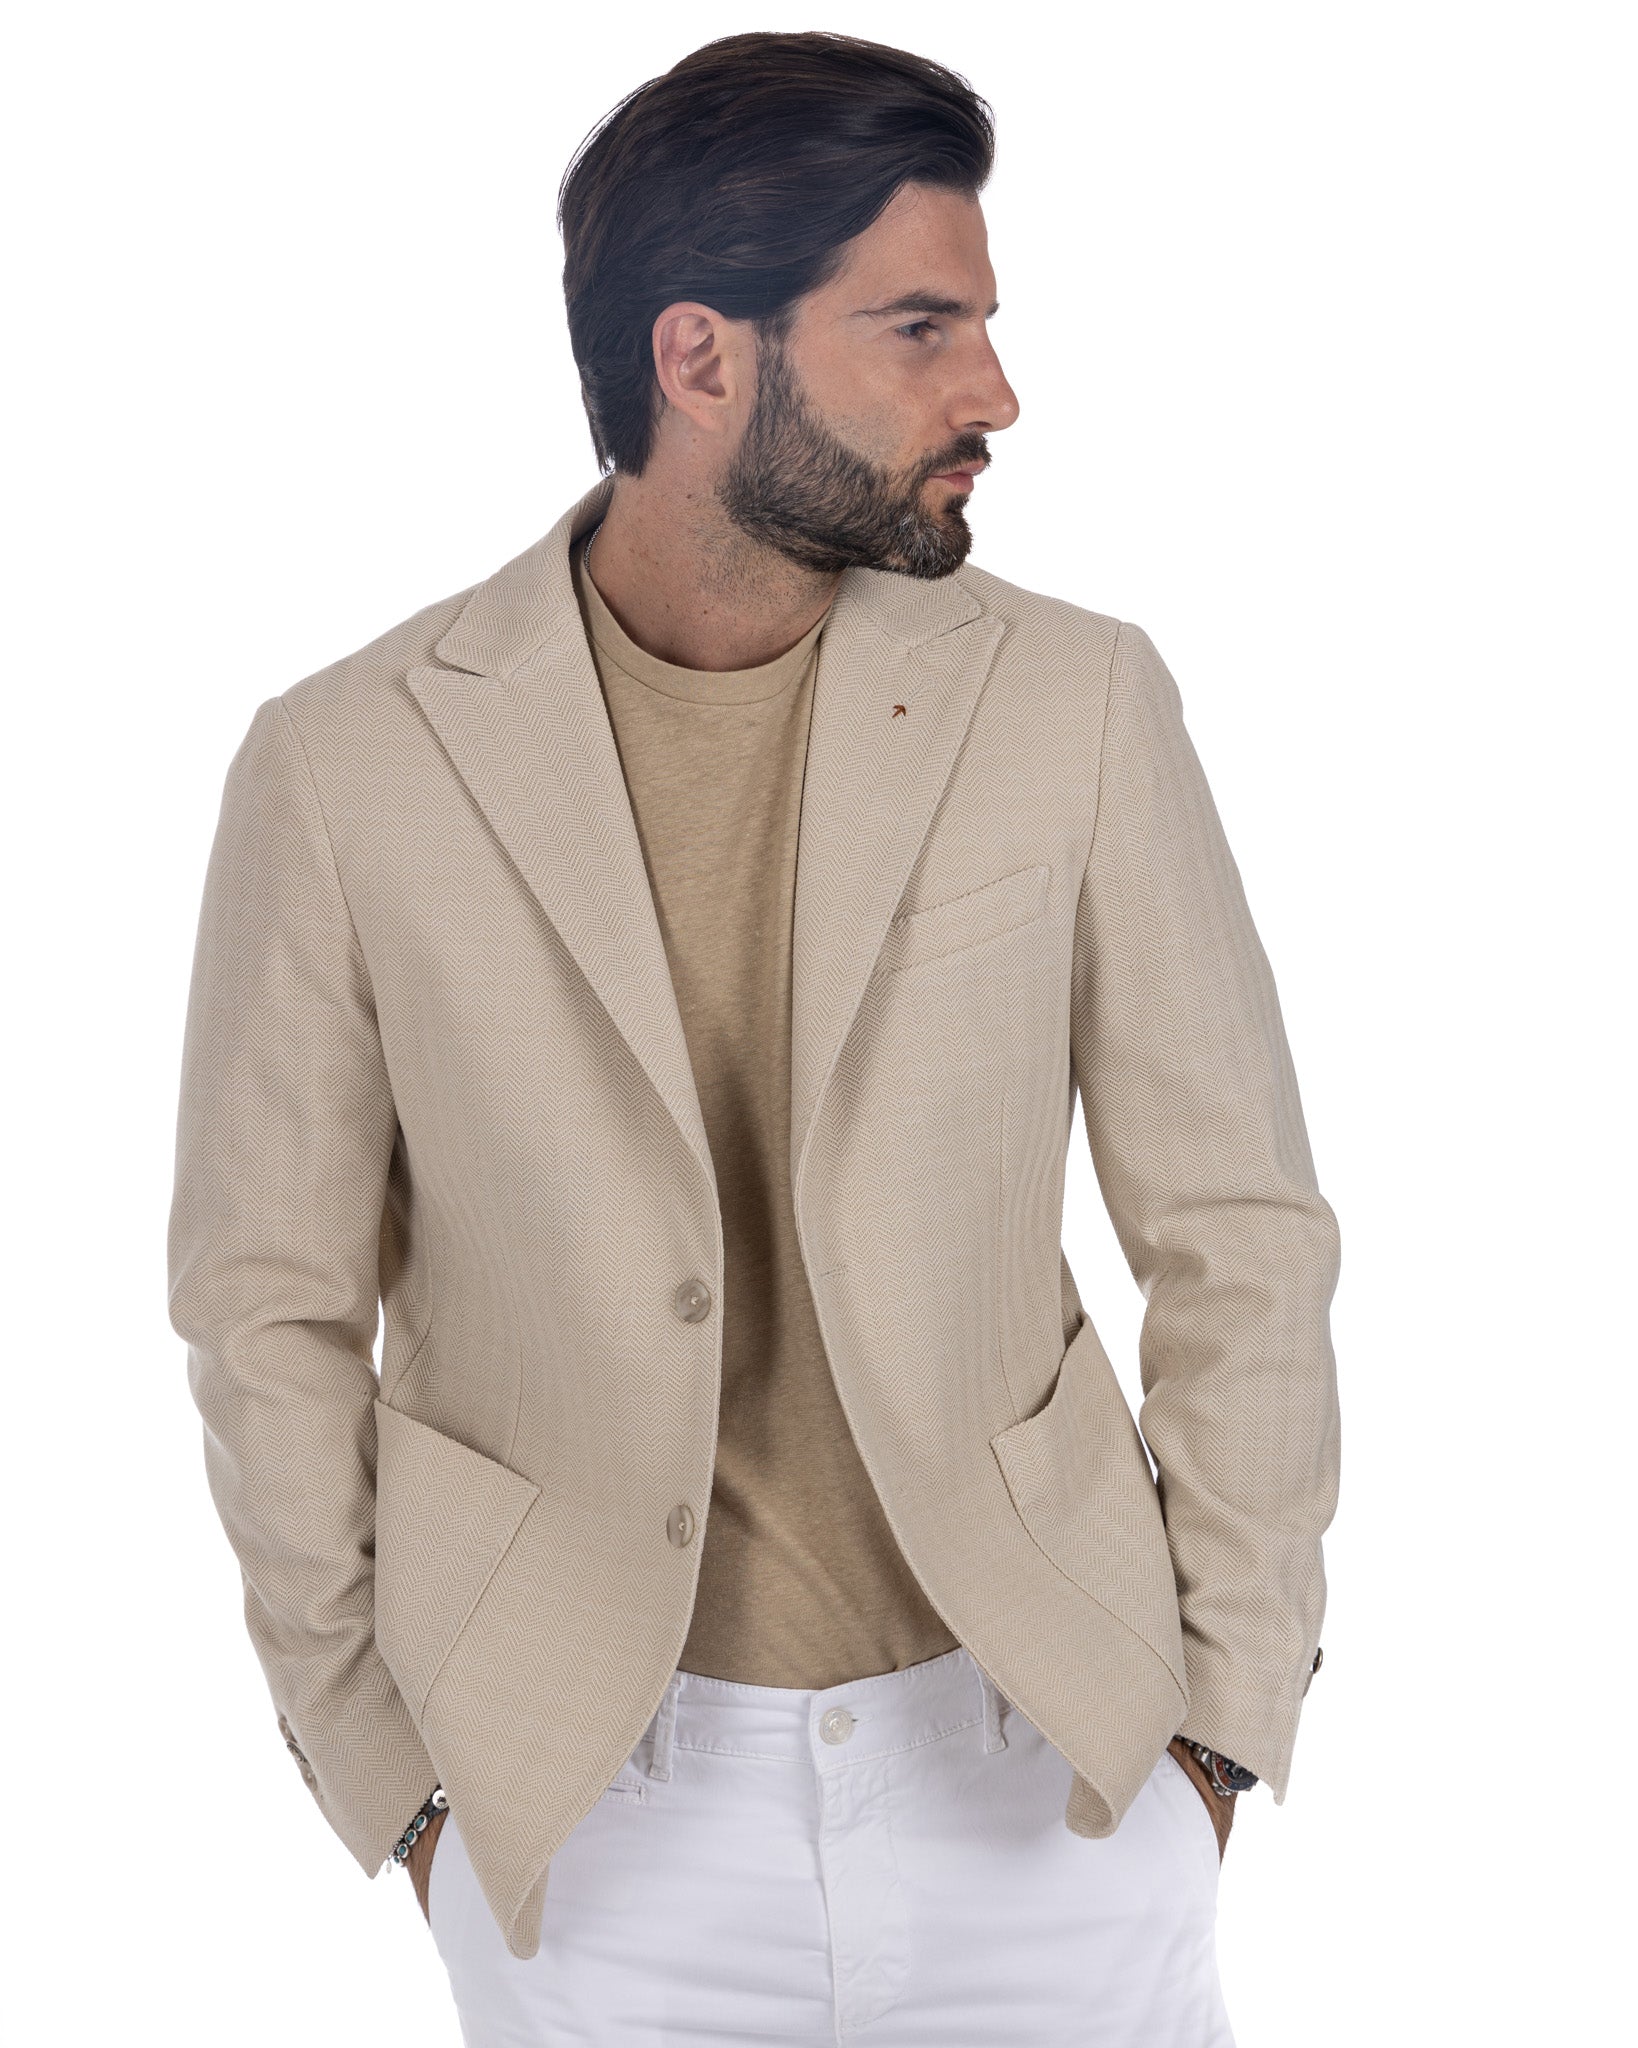 Noto - beige solaro single-breasted jacket